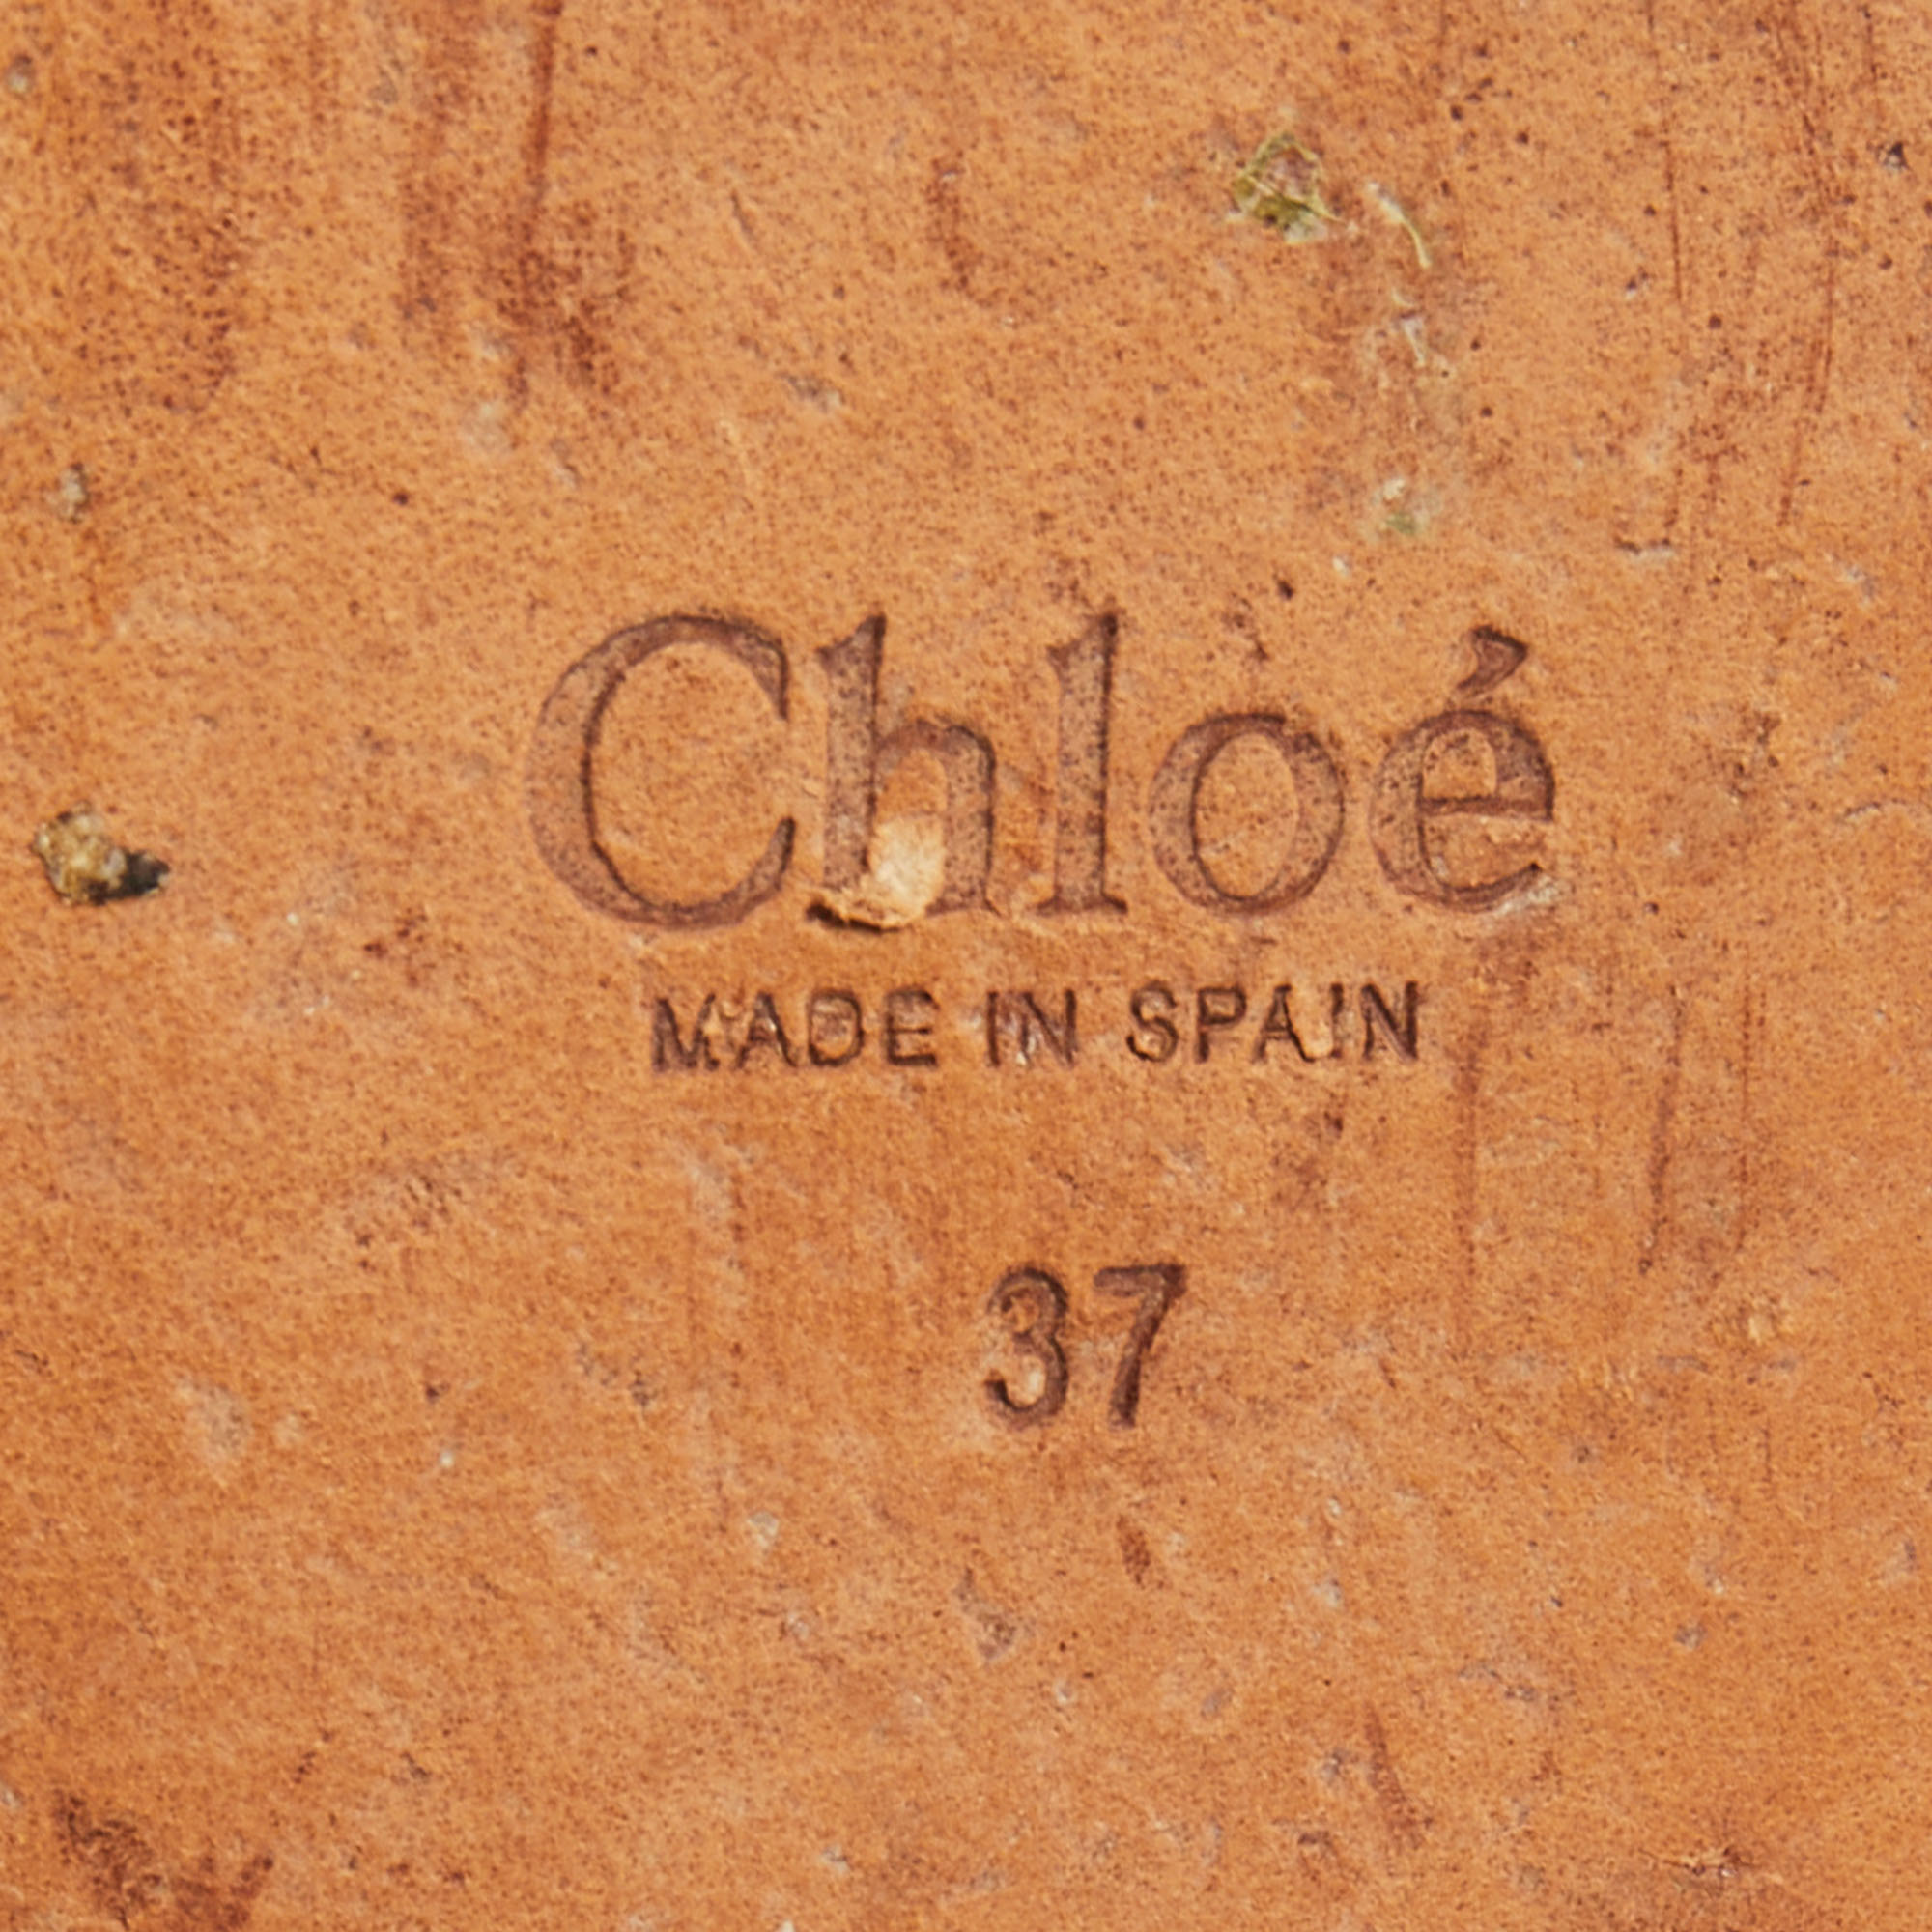 Chloe Beige Leather Lauren Espadrille Slide Sandals Size 37